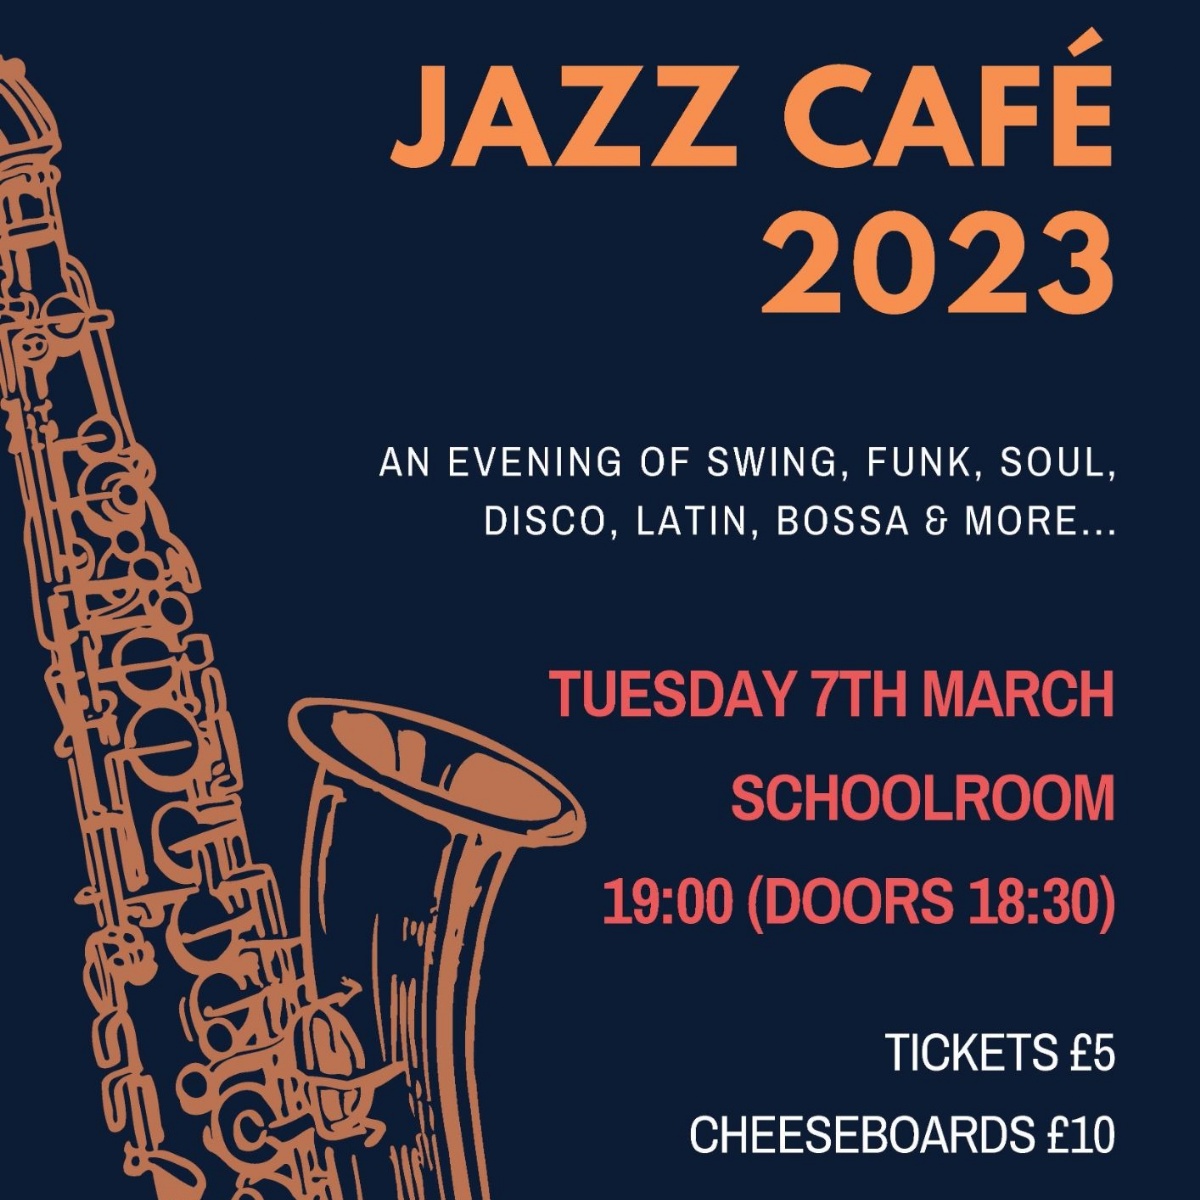 The Judd School Jazz Café 2023